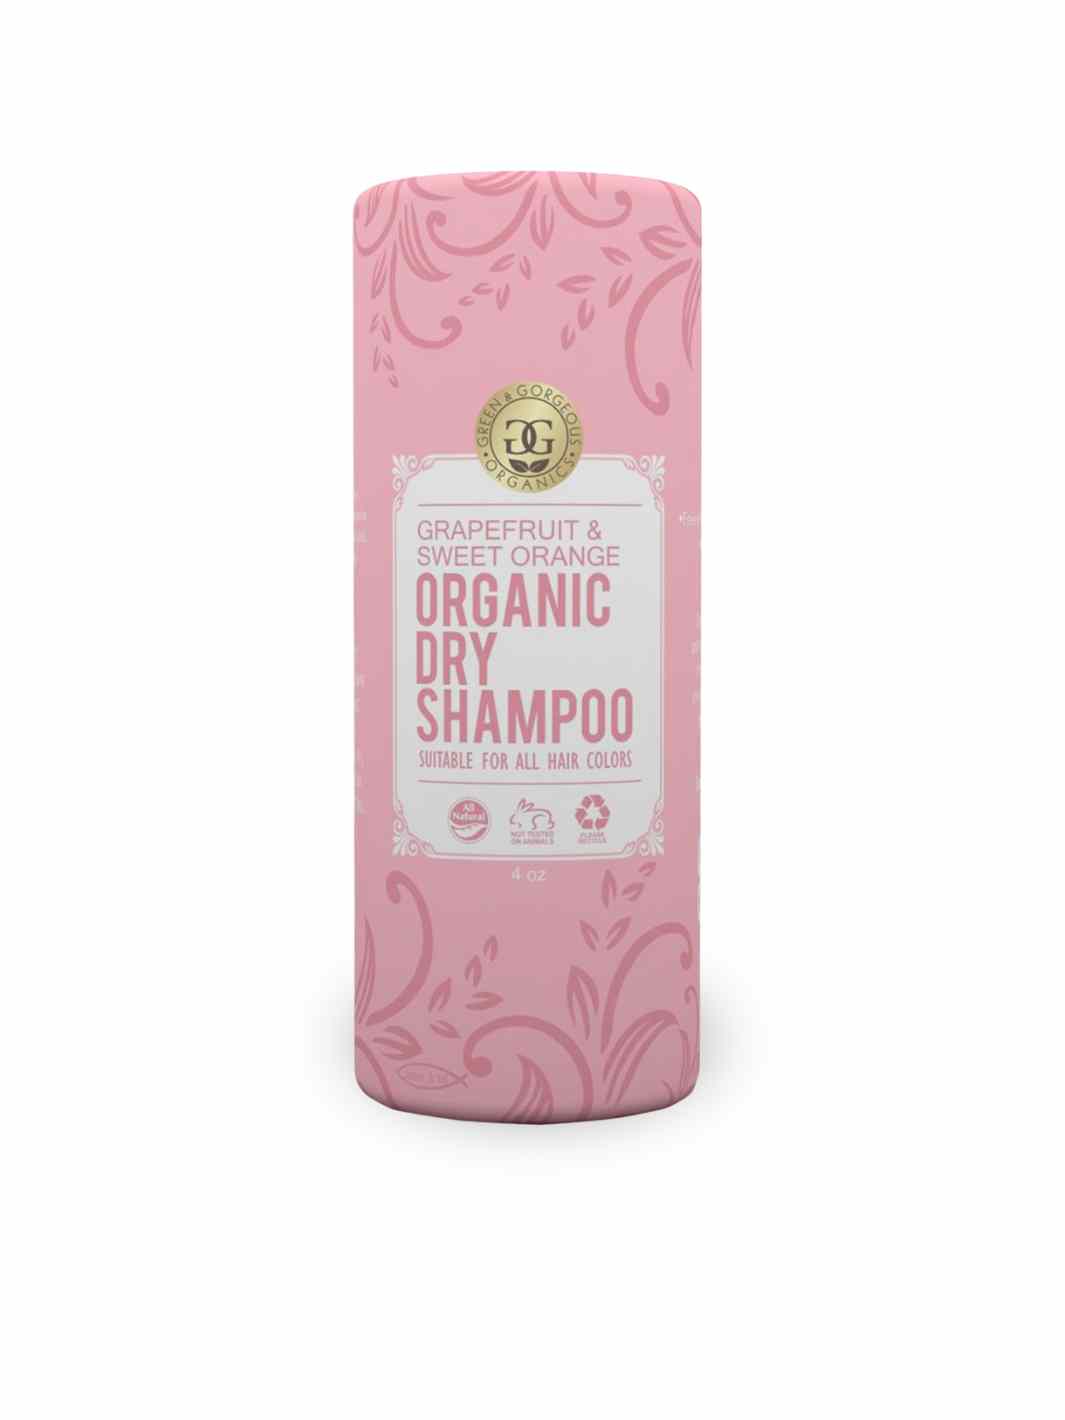 Green & Gorgeous Organics Dry Shampoo Powder Grapefruit & Sweet Orange - 4oz.